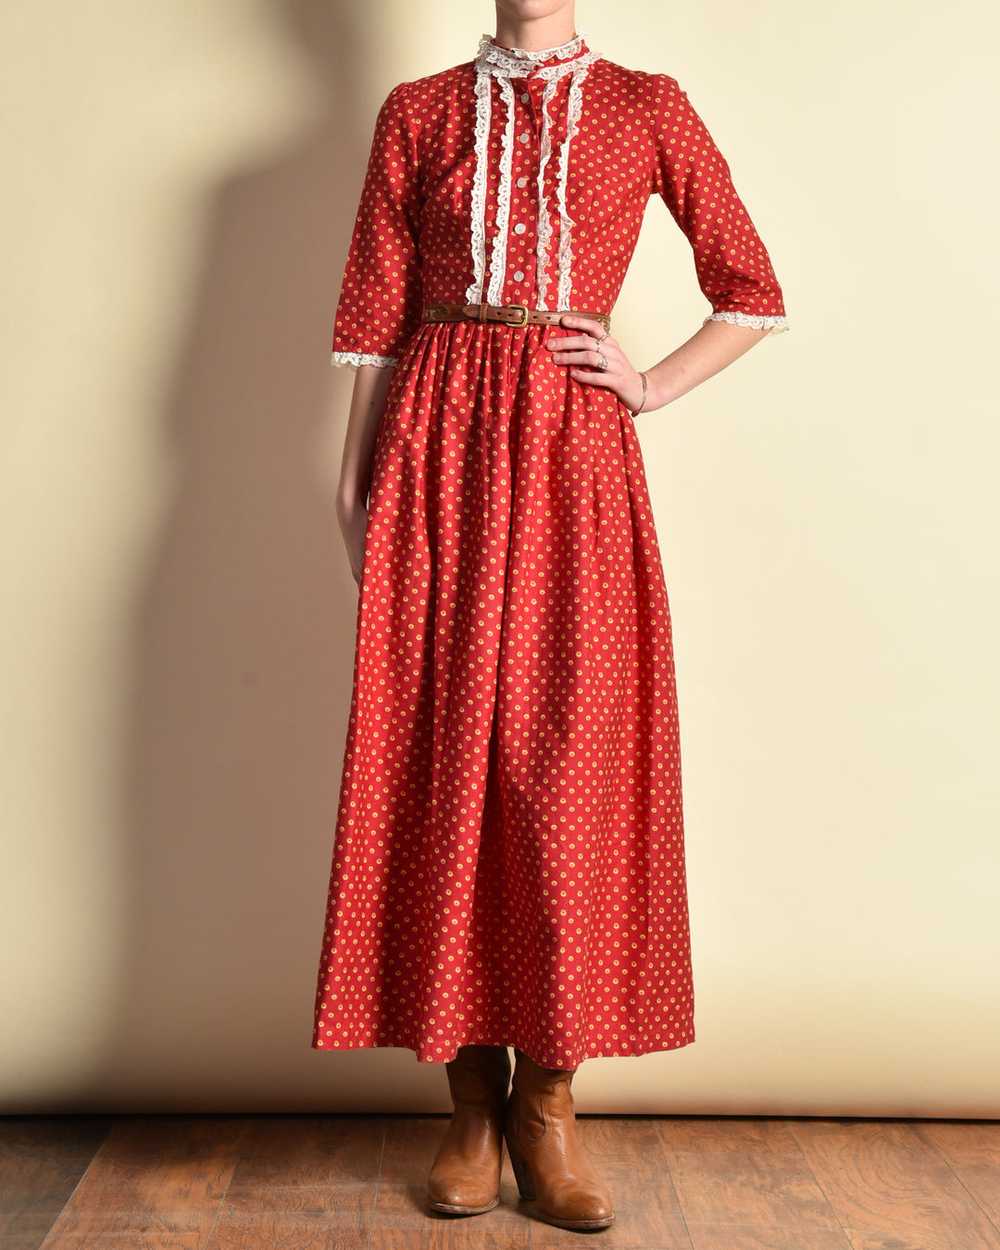 Lucinda 1940s Cotton Prairie Dress - image 3